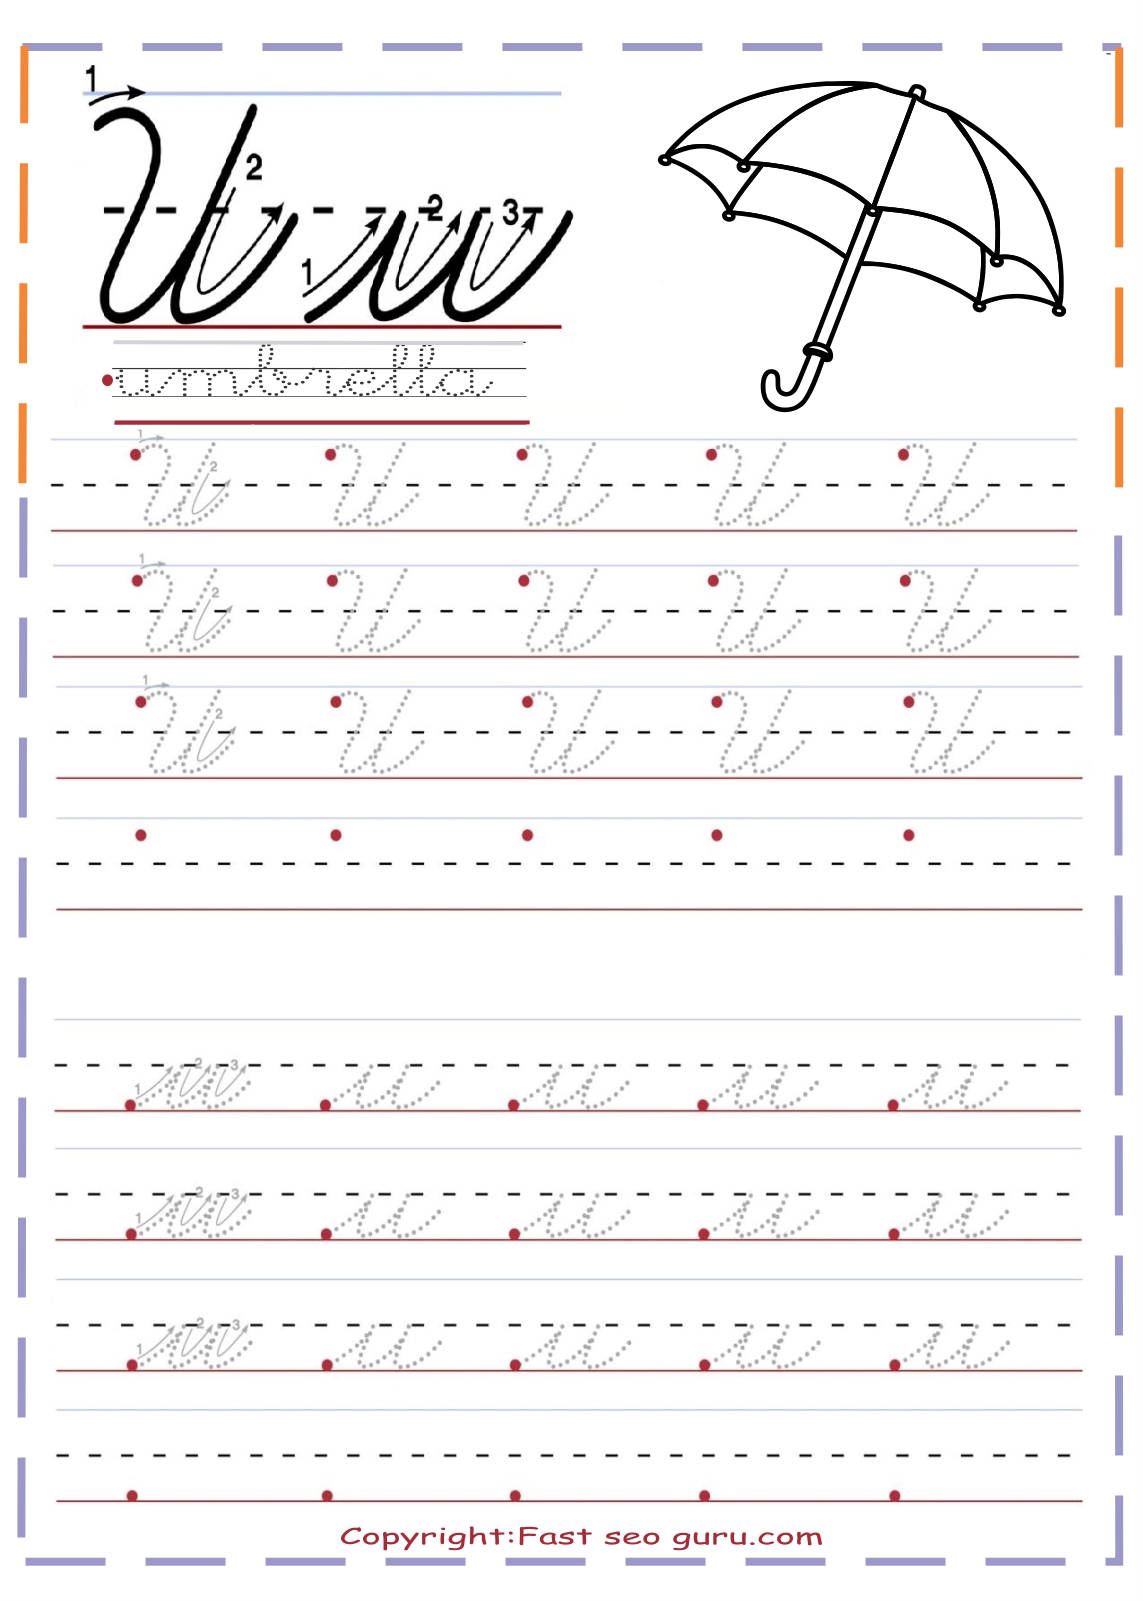 cursive handwriting tracing worksheets letter u for umbrella